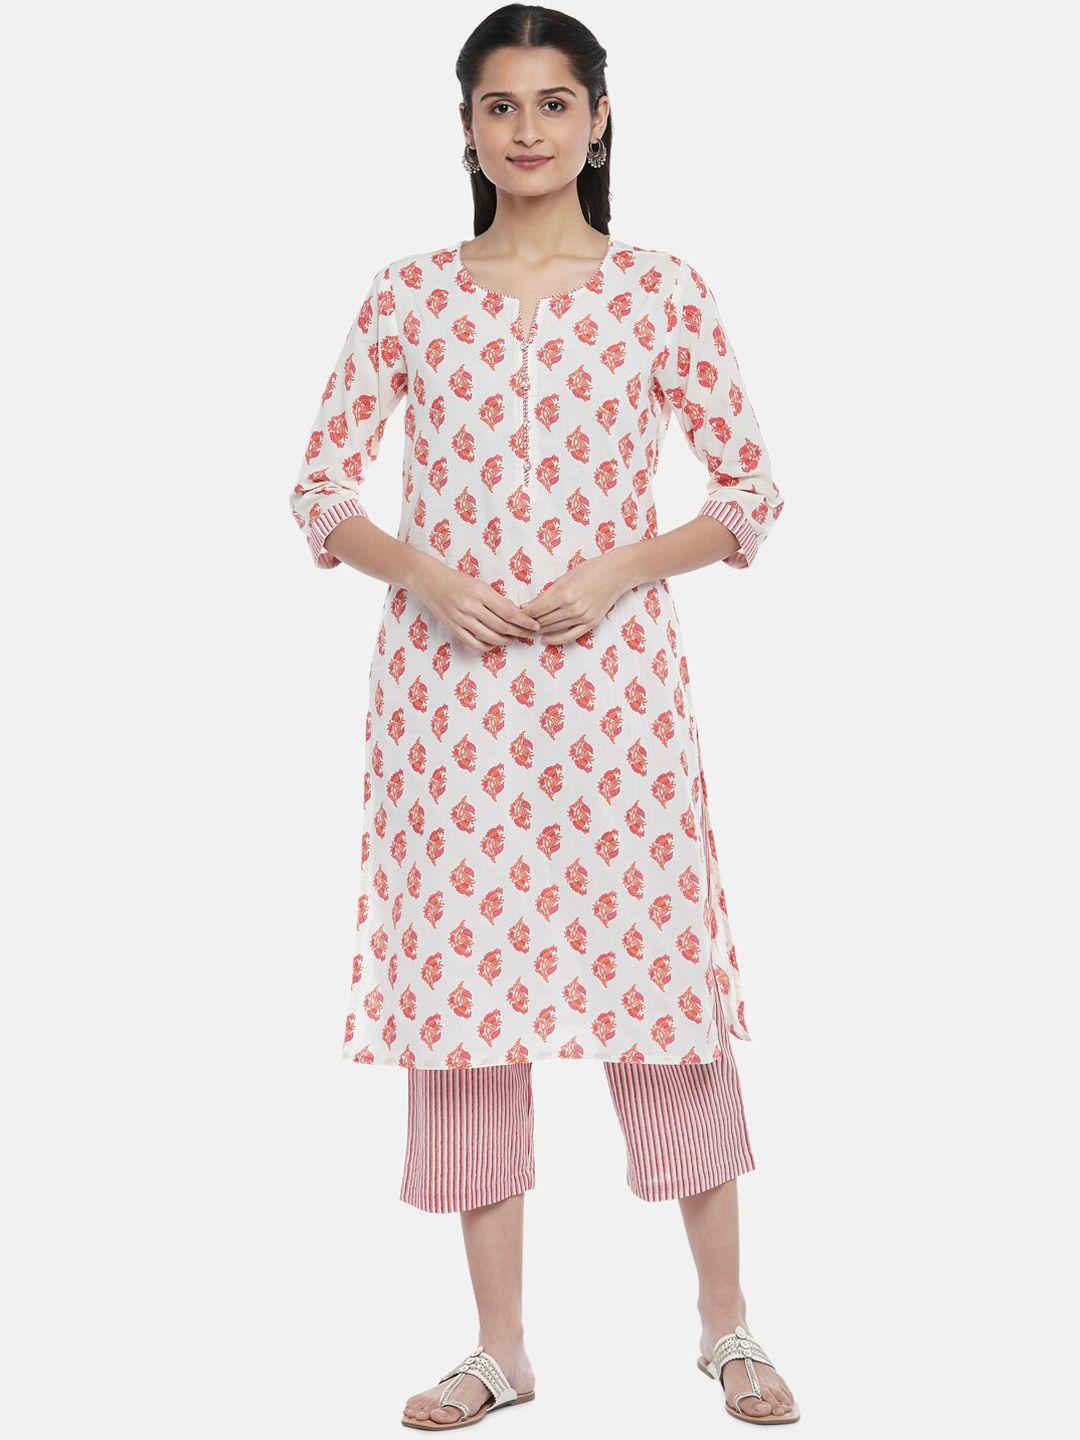 rangmanch-by-pantaloons-women-pink-ethnic-motifs-printed-pure-cotton-kurti-with-palazzos